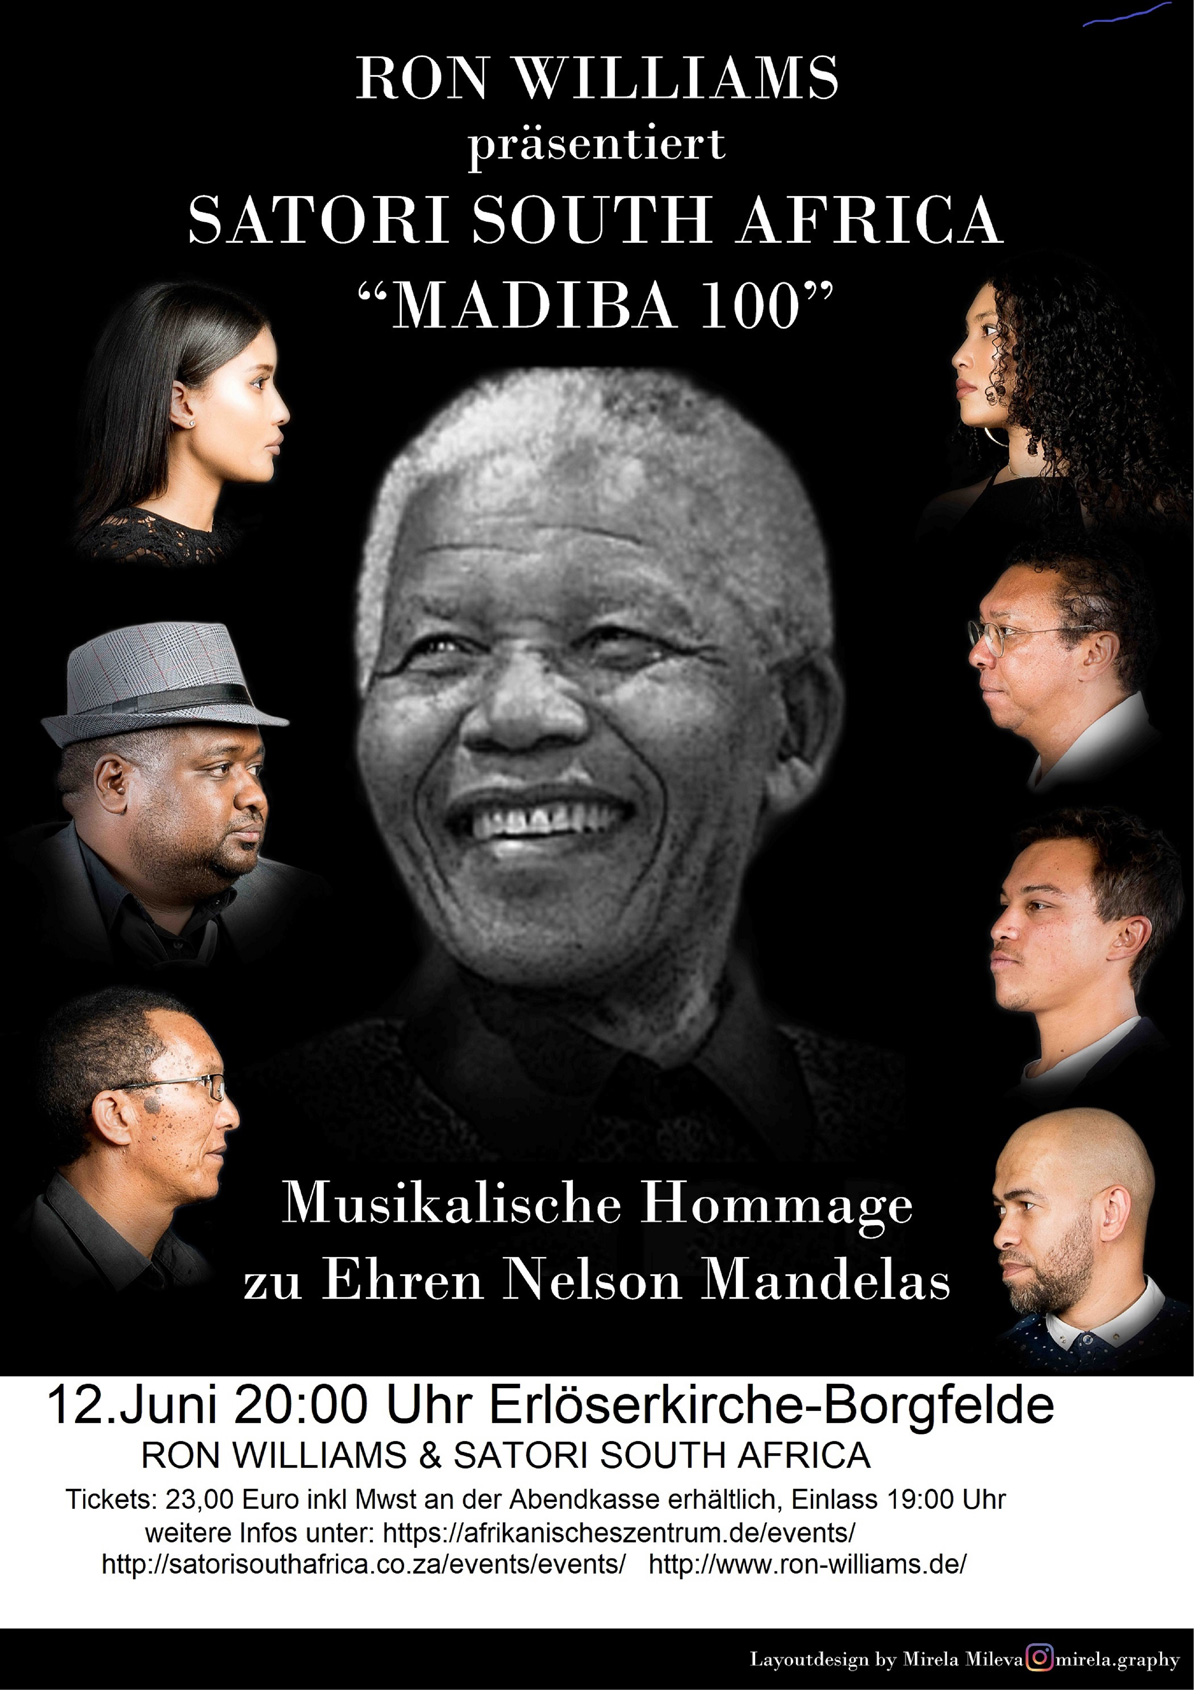 Konzert: Ron Williams Madiba 100 Satori-South Africa Ort: Hamburg, Erlöserkirche Borgfelde Zeit: 12. Juni 2018